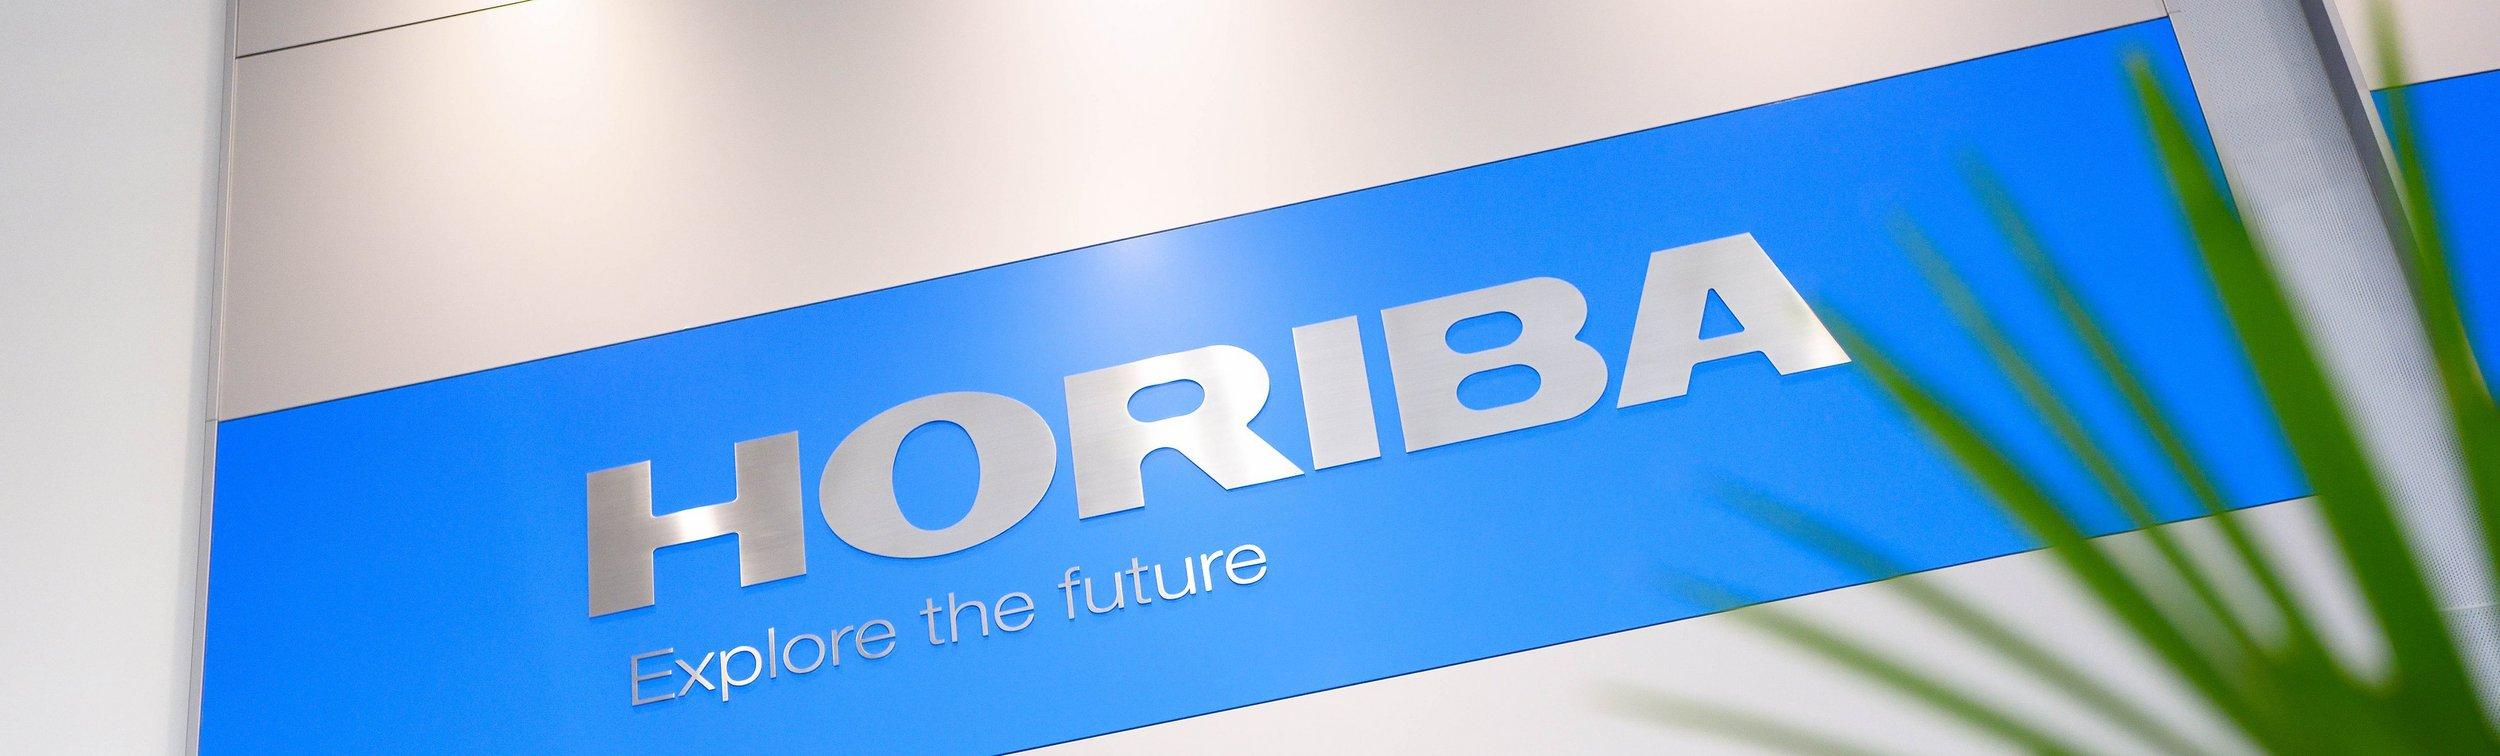 HORIBA Instruments Incorporated | Explore the Future 